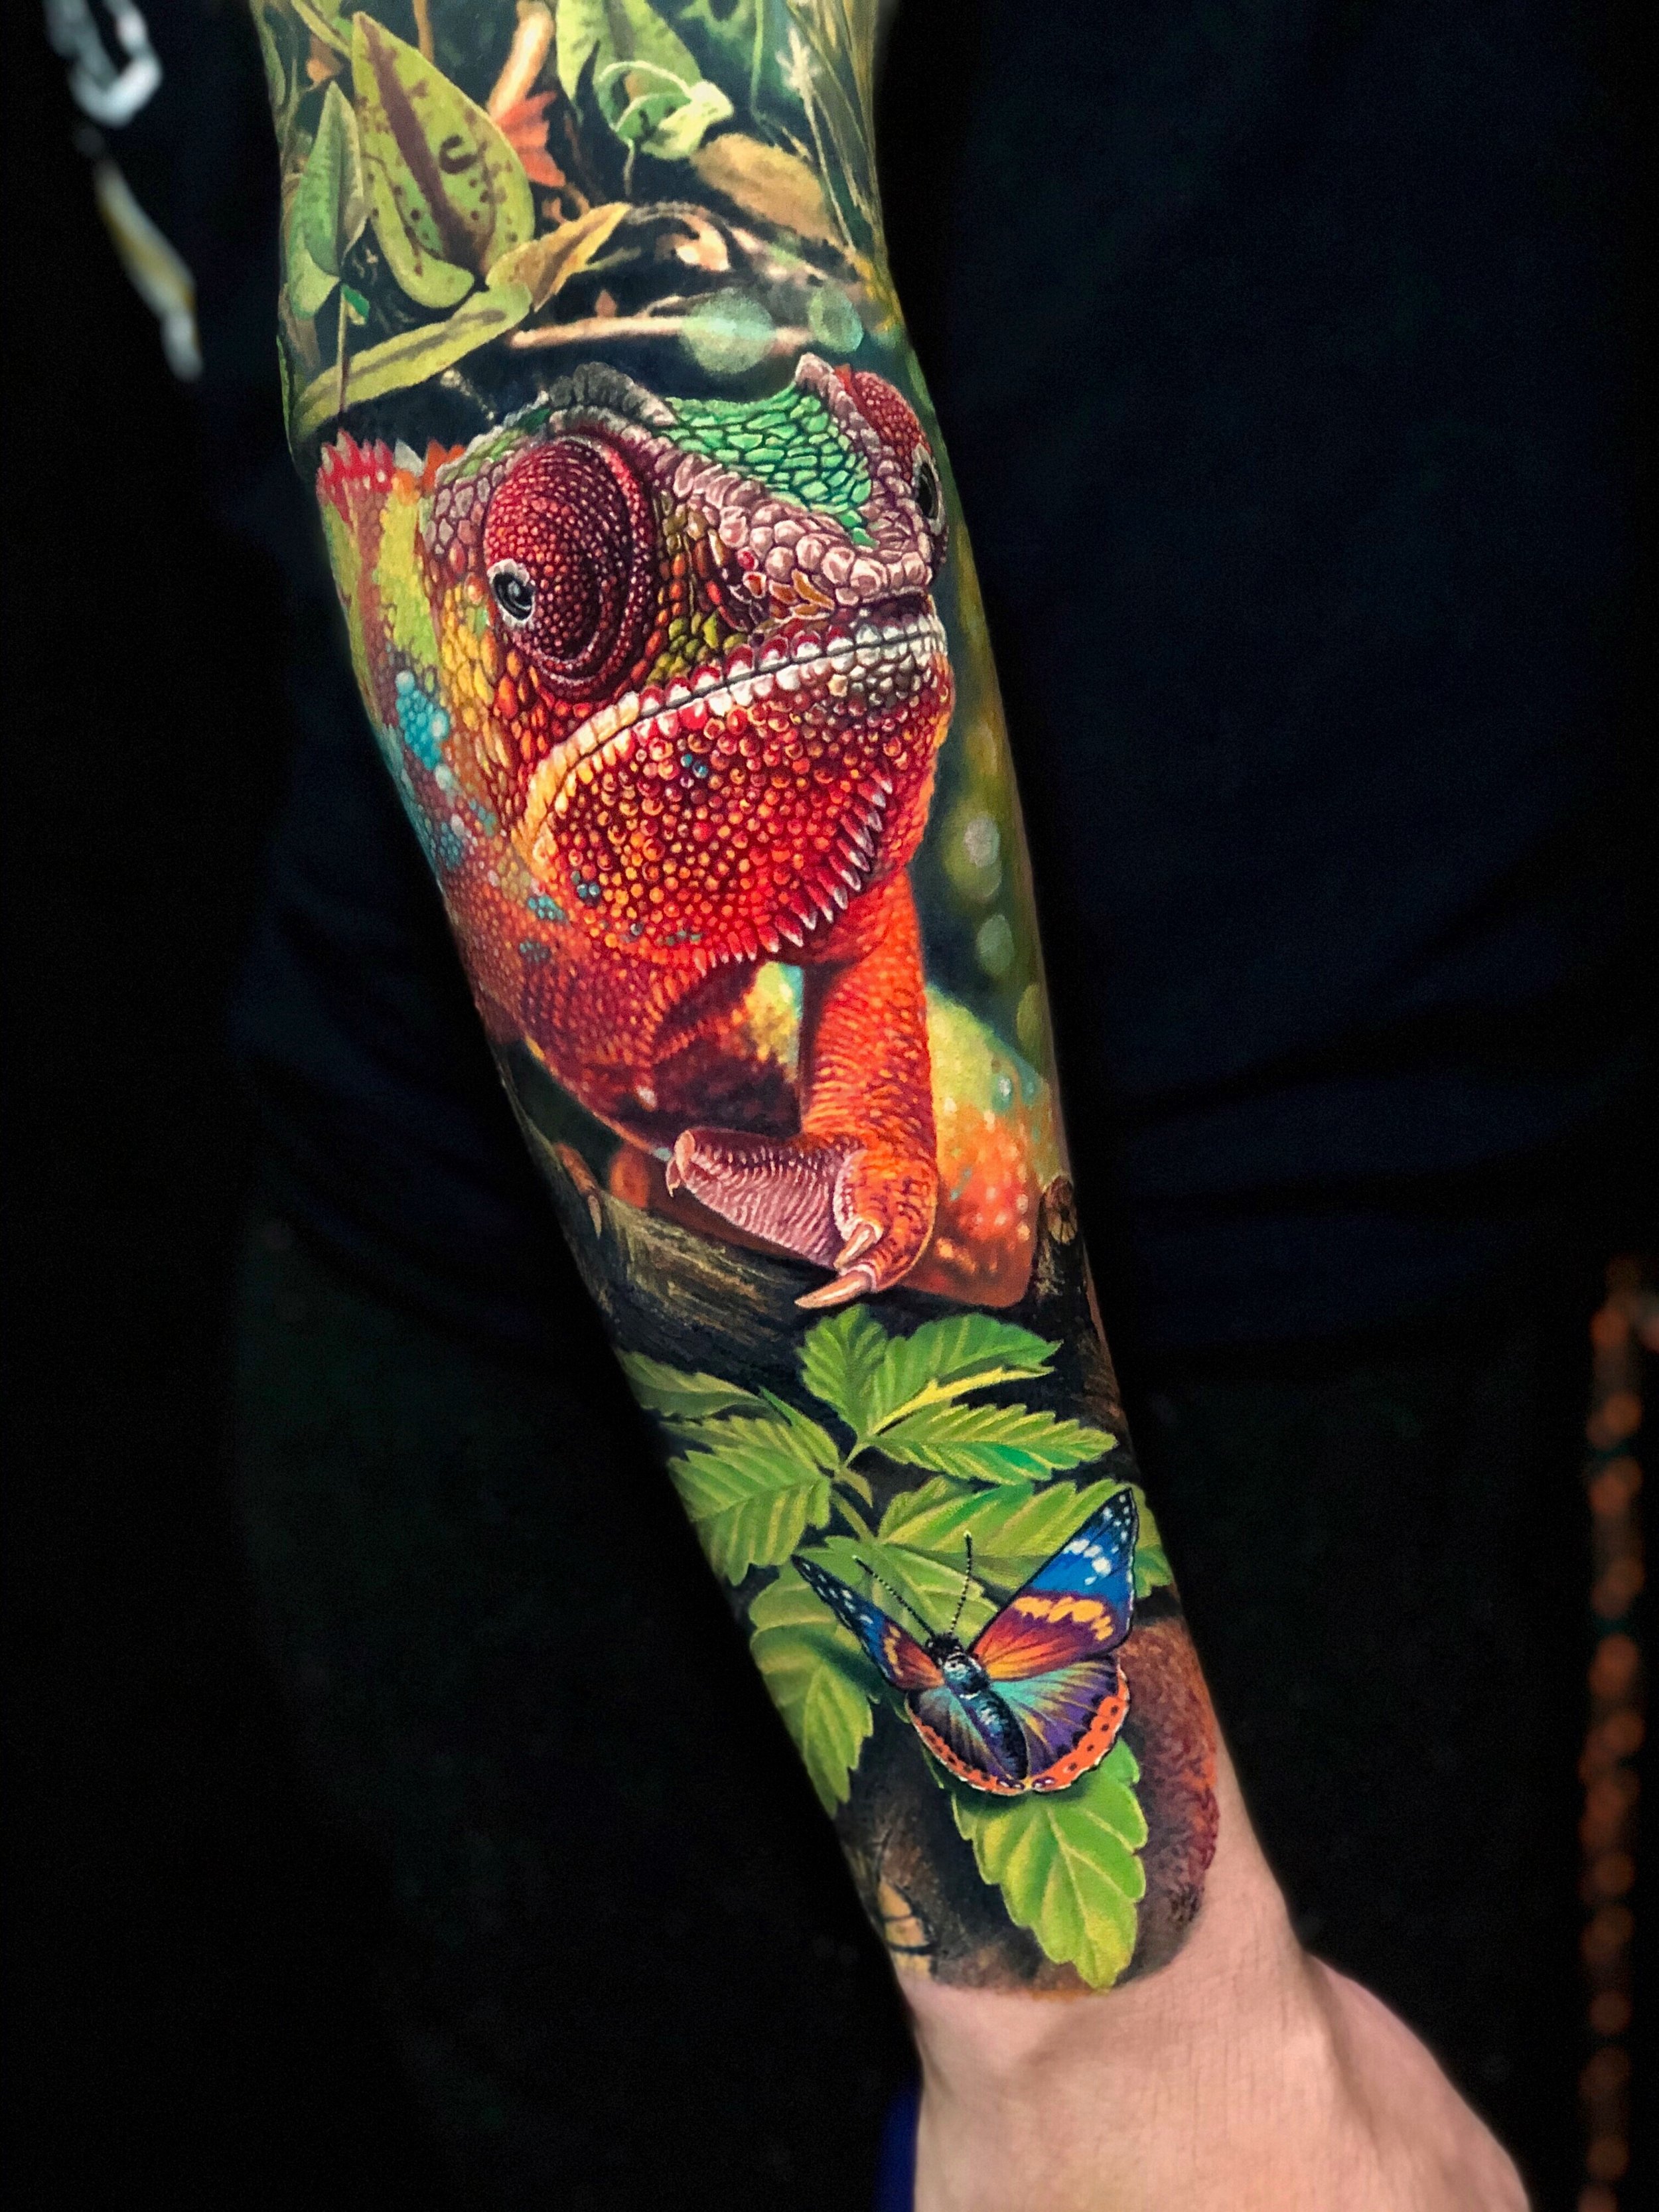 ally barnett tattoo on Twitter Did somemorthe on this of isnt  rainforest rainforest tattoo sleeve hibiscus tattooartist  httpstcoawiyAstb6R  Twitter